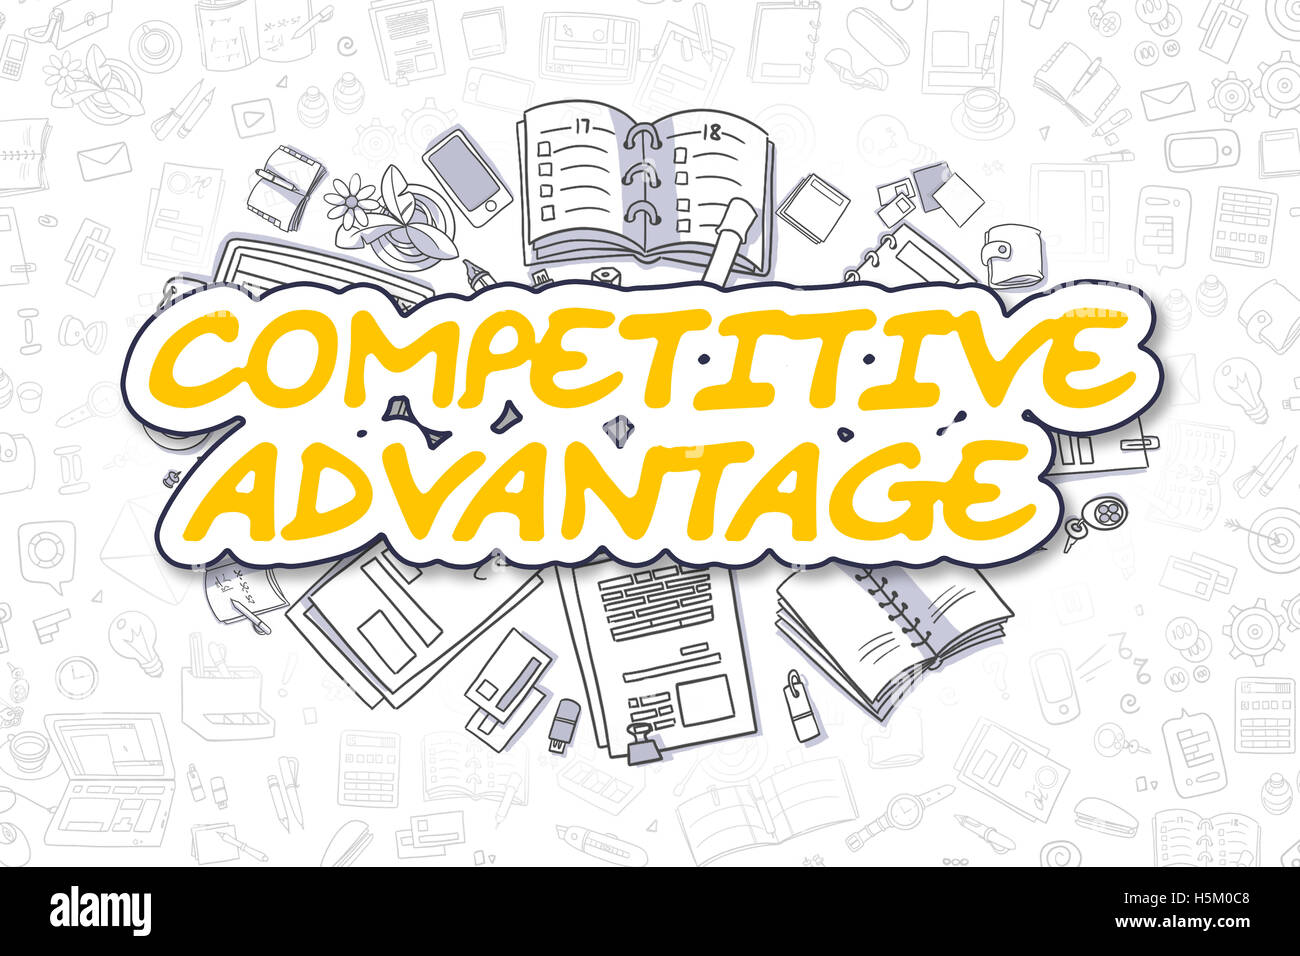 Competitive Advantage - Business Concept. Stock Photo